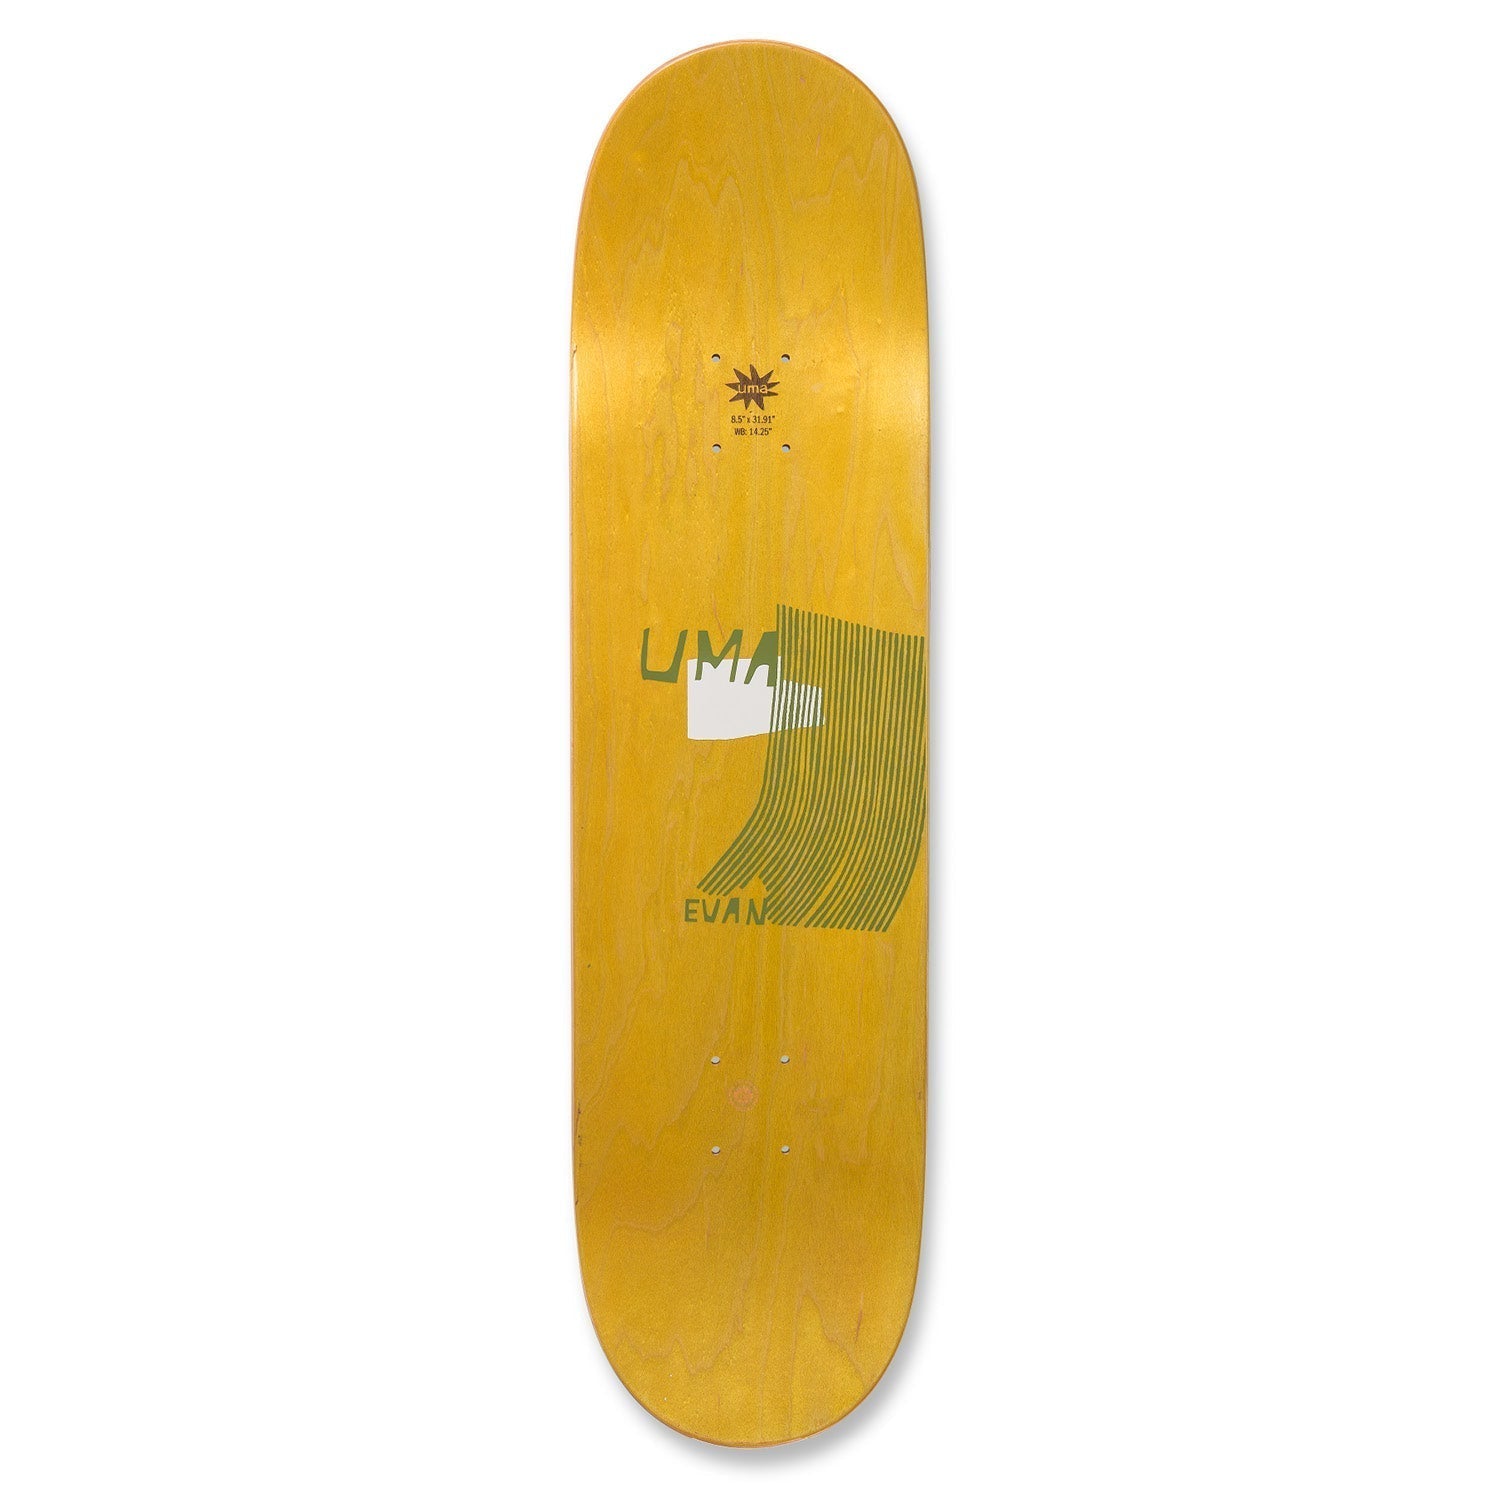 UMA 'Undercurrent Evan' 8.25" skateboard deck - SkatebruhSG